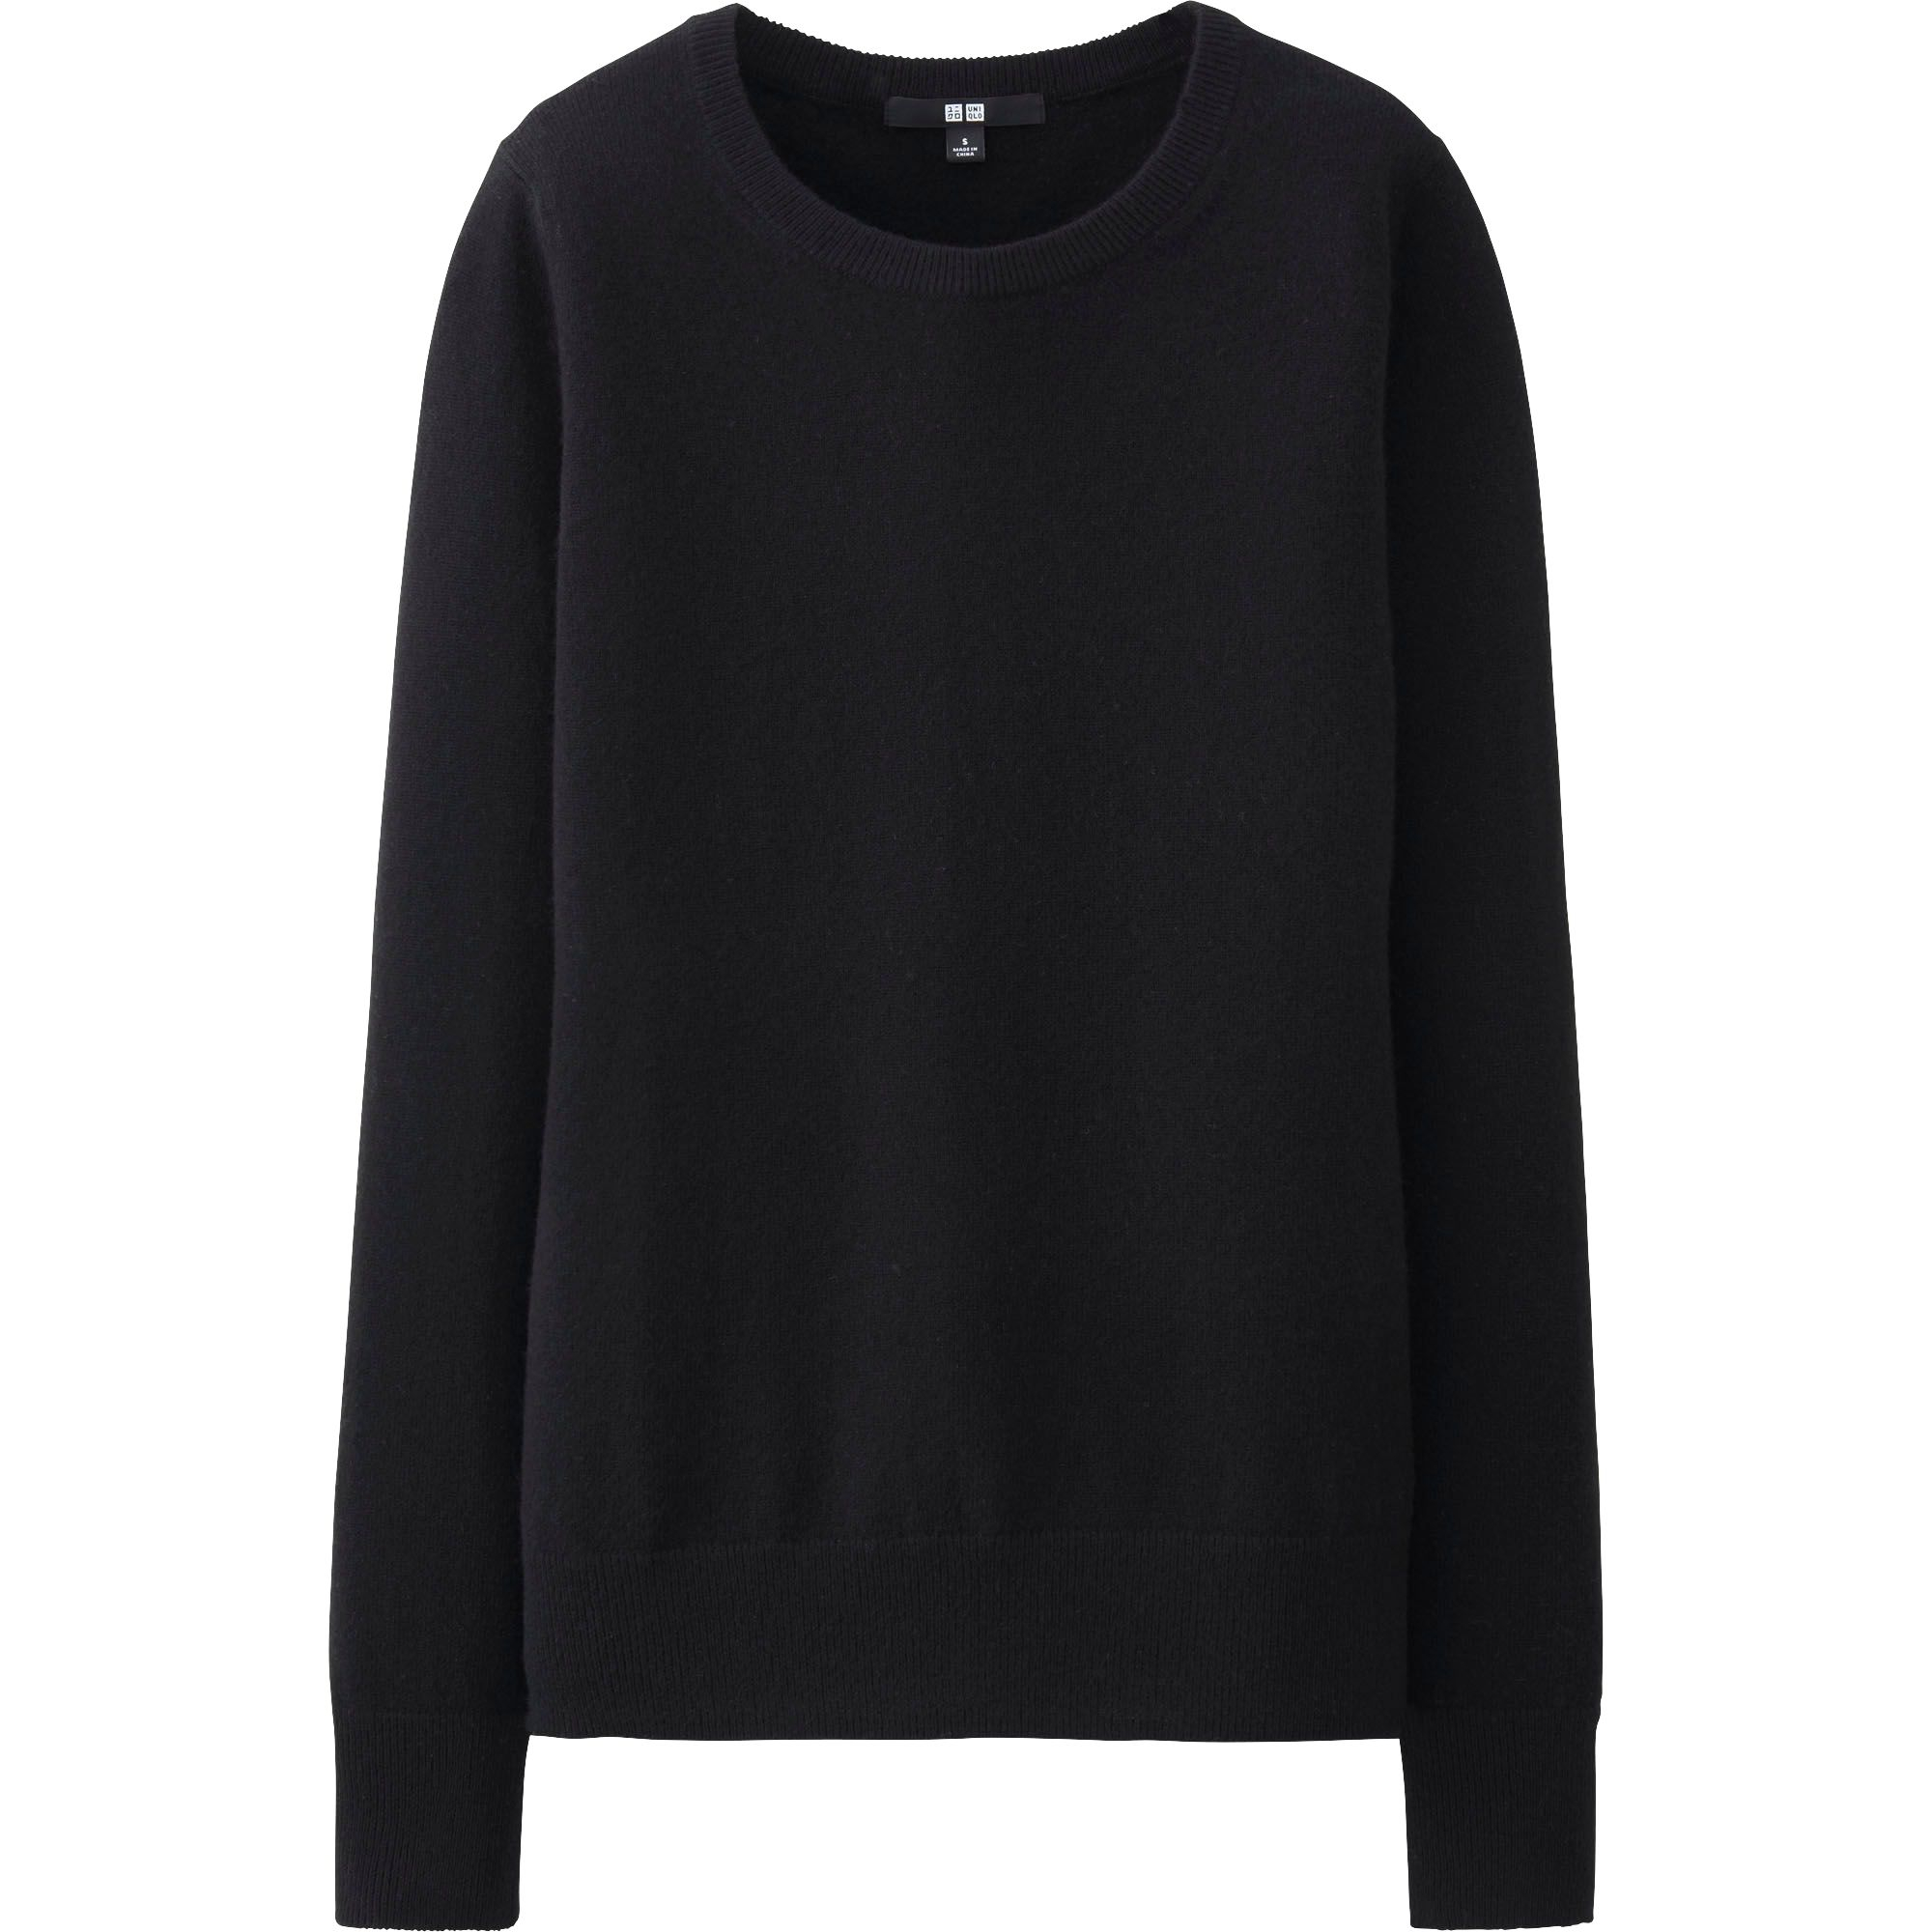 Lyst - Uniqlo Women Cashmere Round Neck Sweater in Black